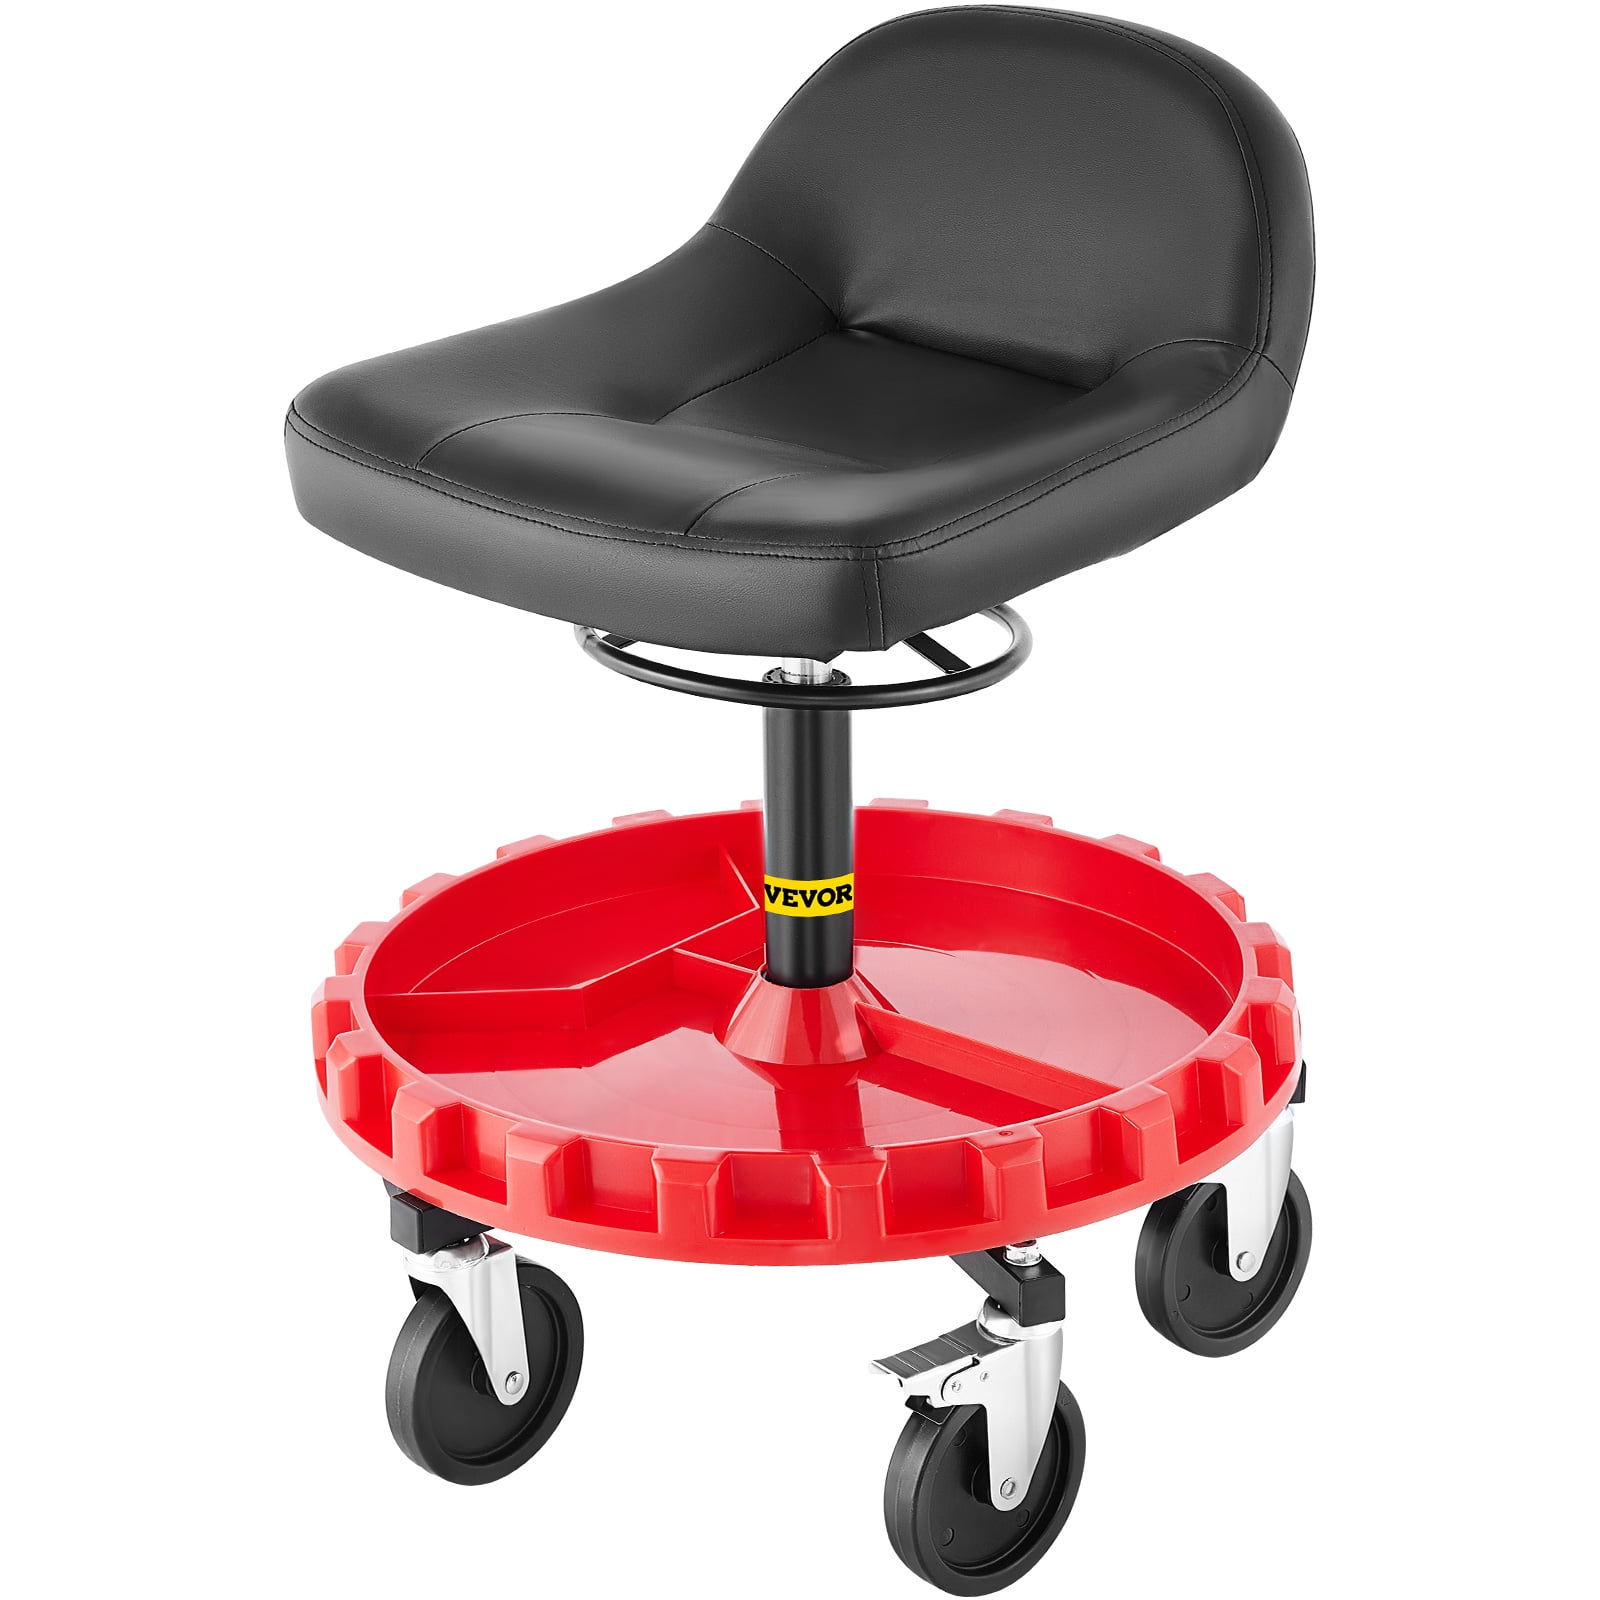 Garden Tools Rocker Rolling Seat Wheeled Chair Comfortable Height Adjustable 